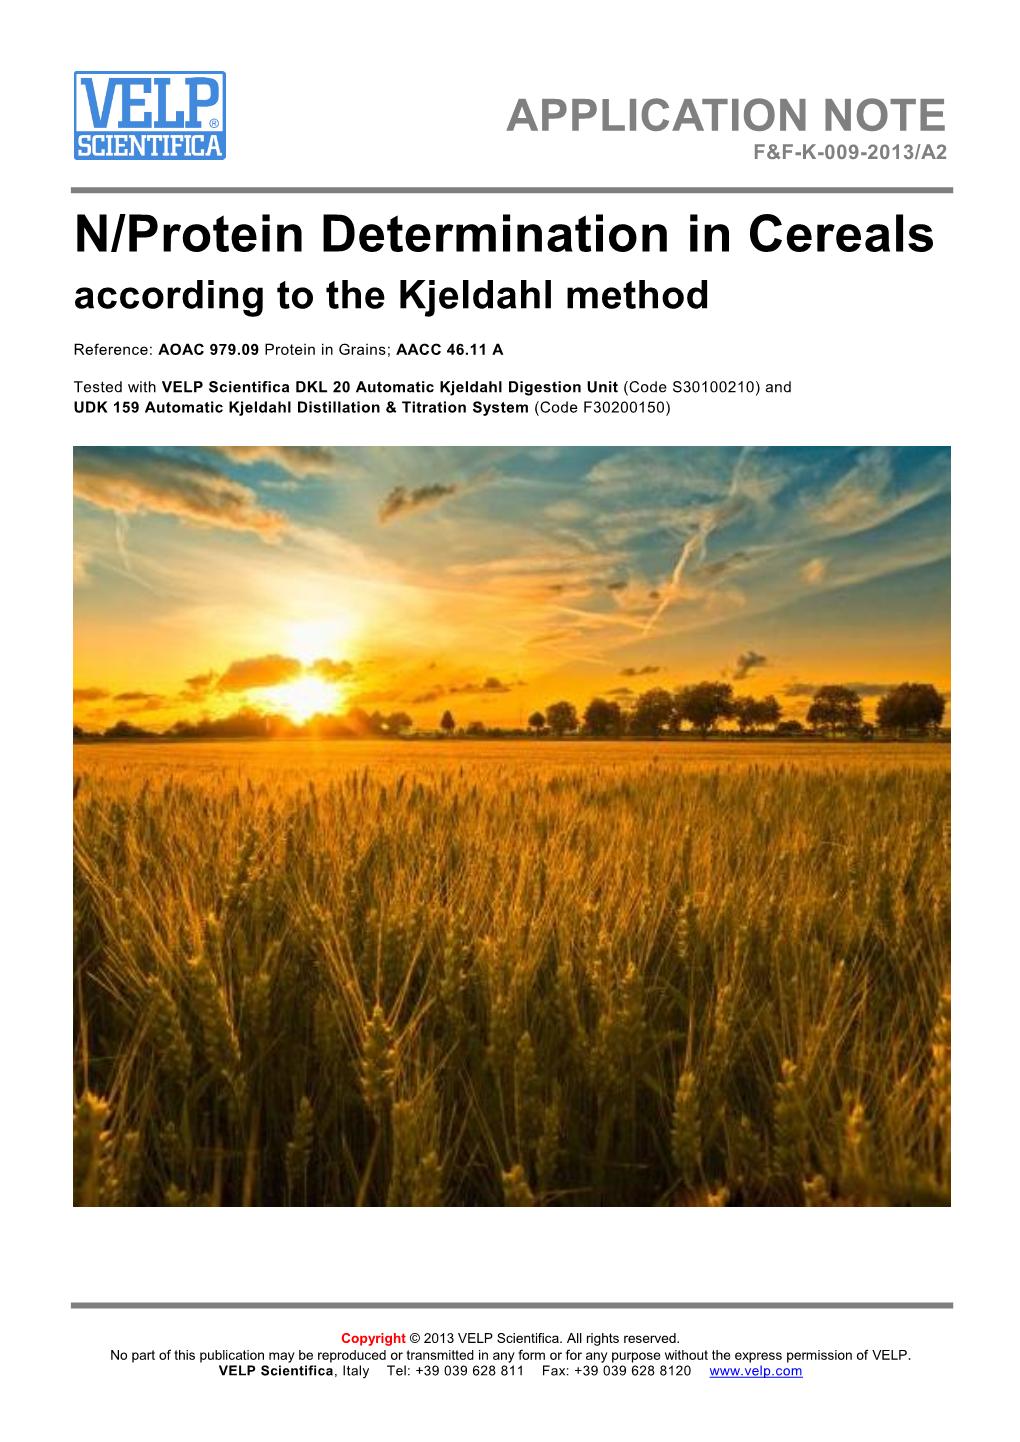 N/Protein Determination in Cereals According to the Kjeldahl Method